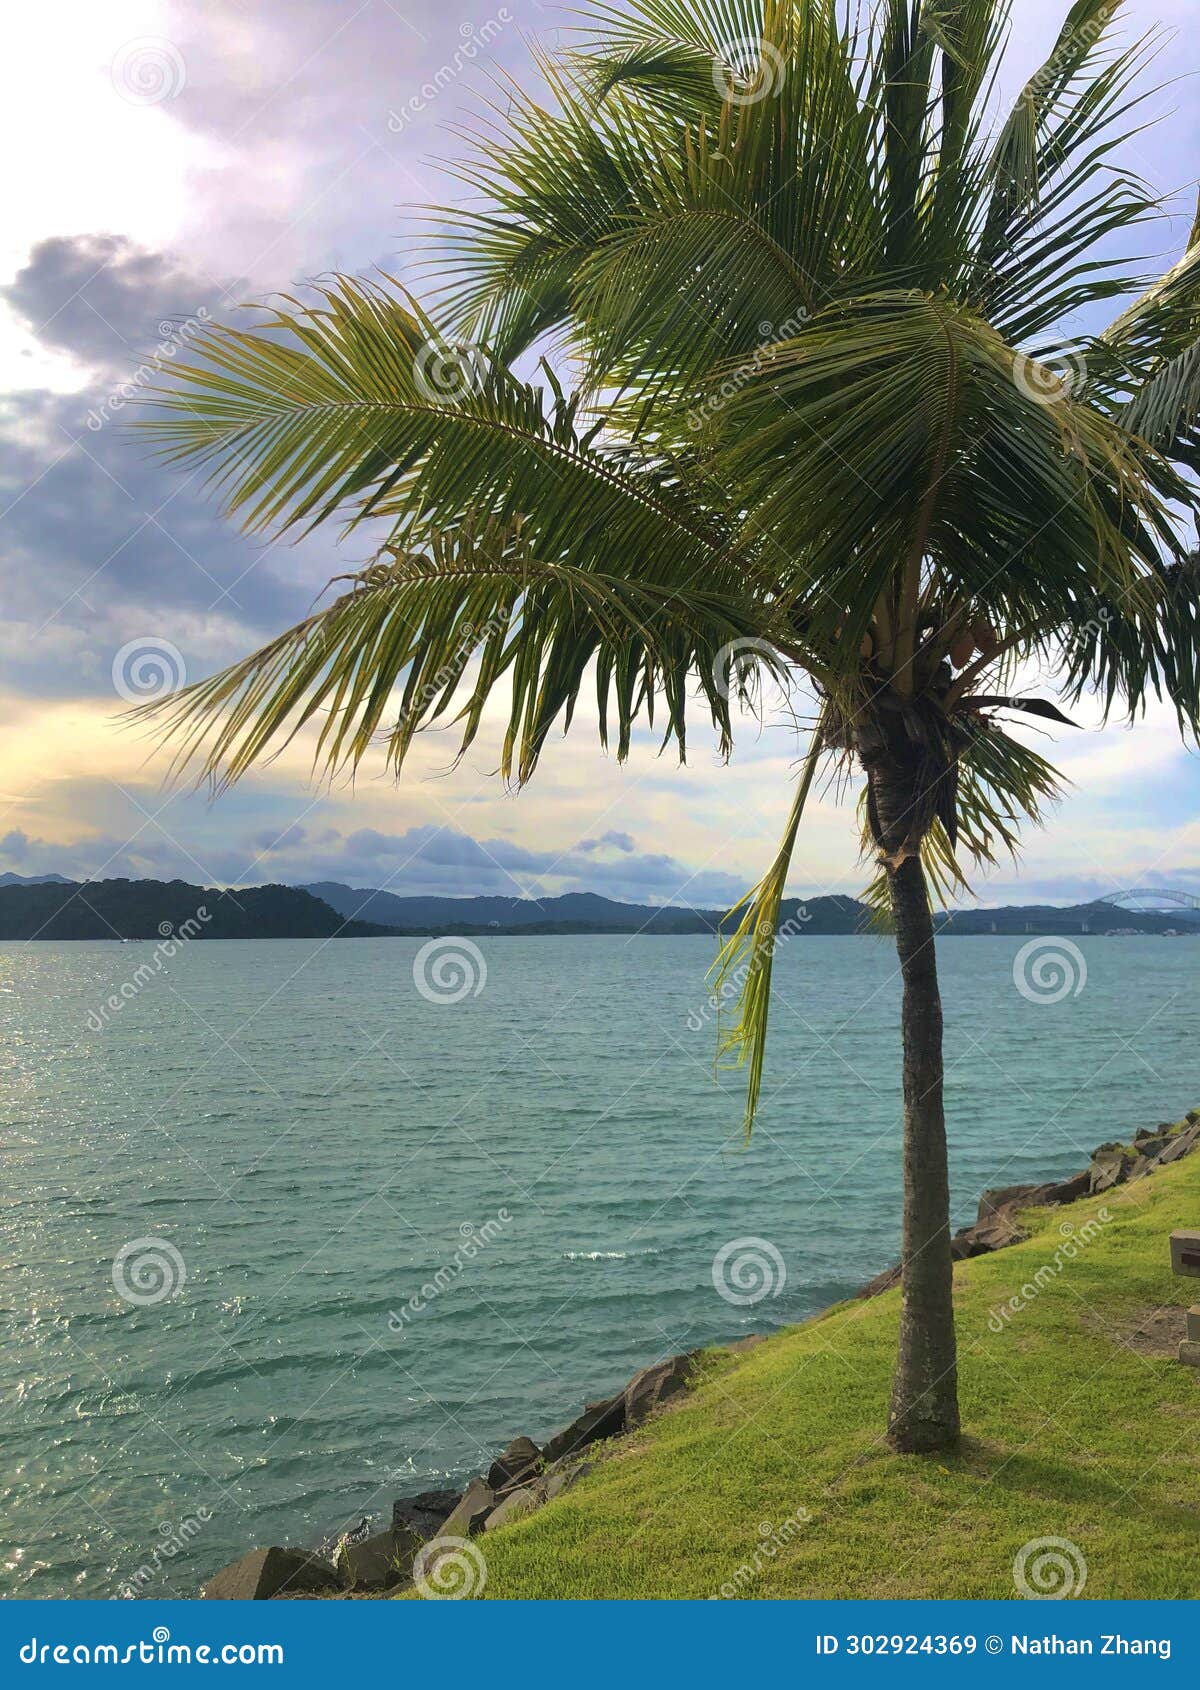 palm tree next to panama canal